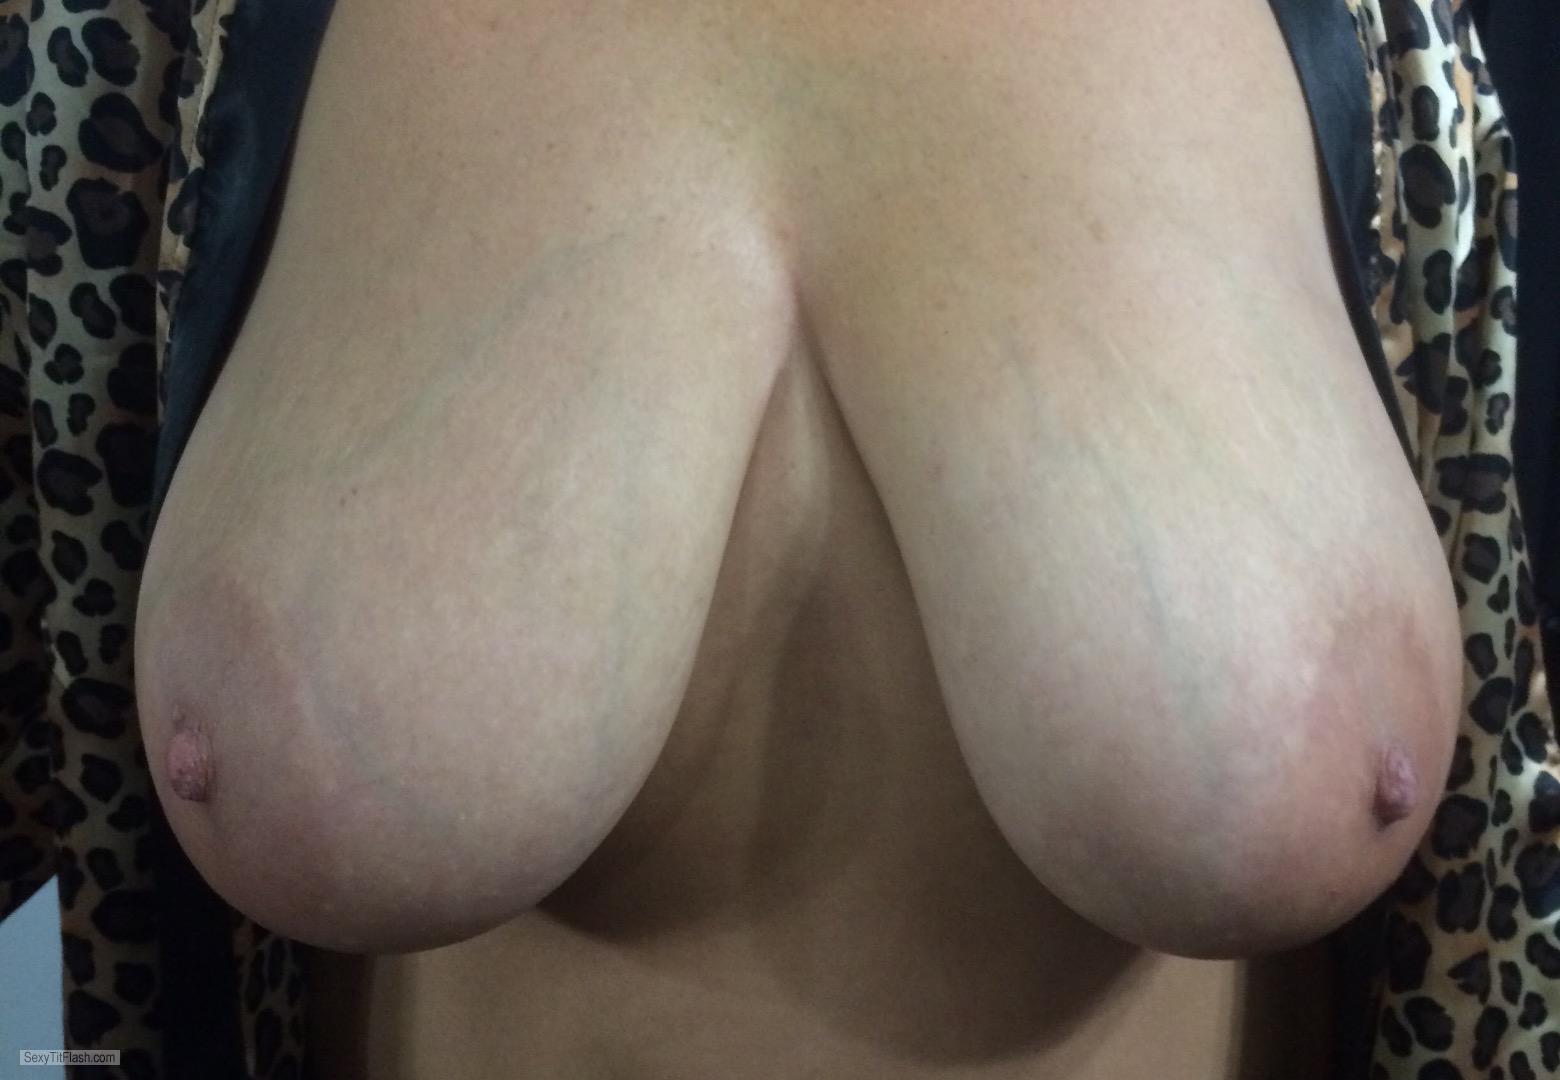 Tit Flash: My Extremely Big Tits - Tripledees from United Kingdom